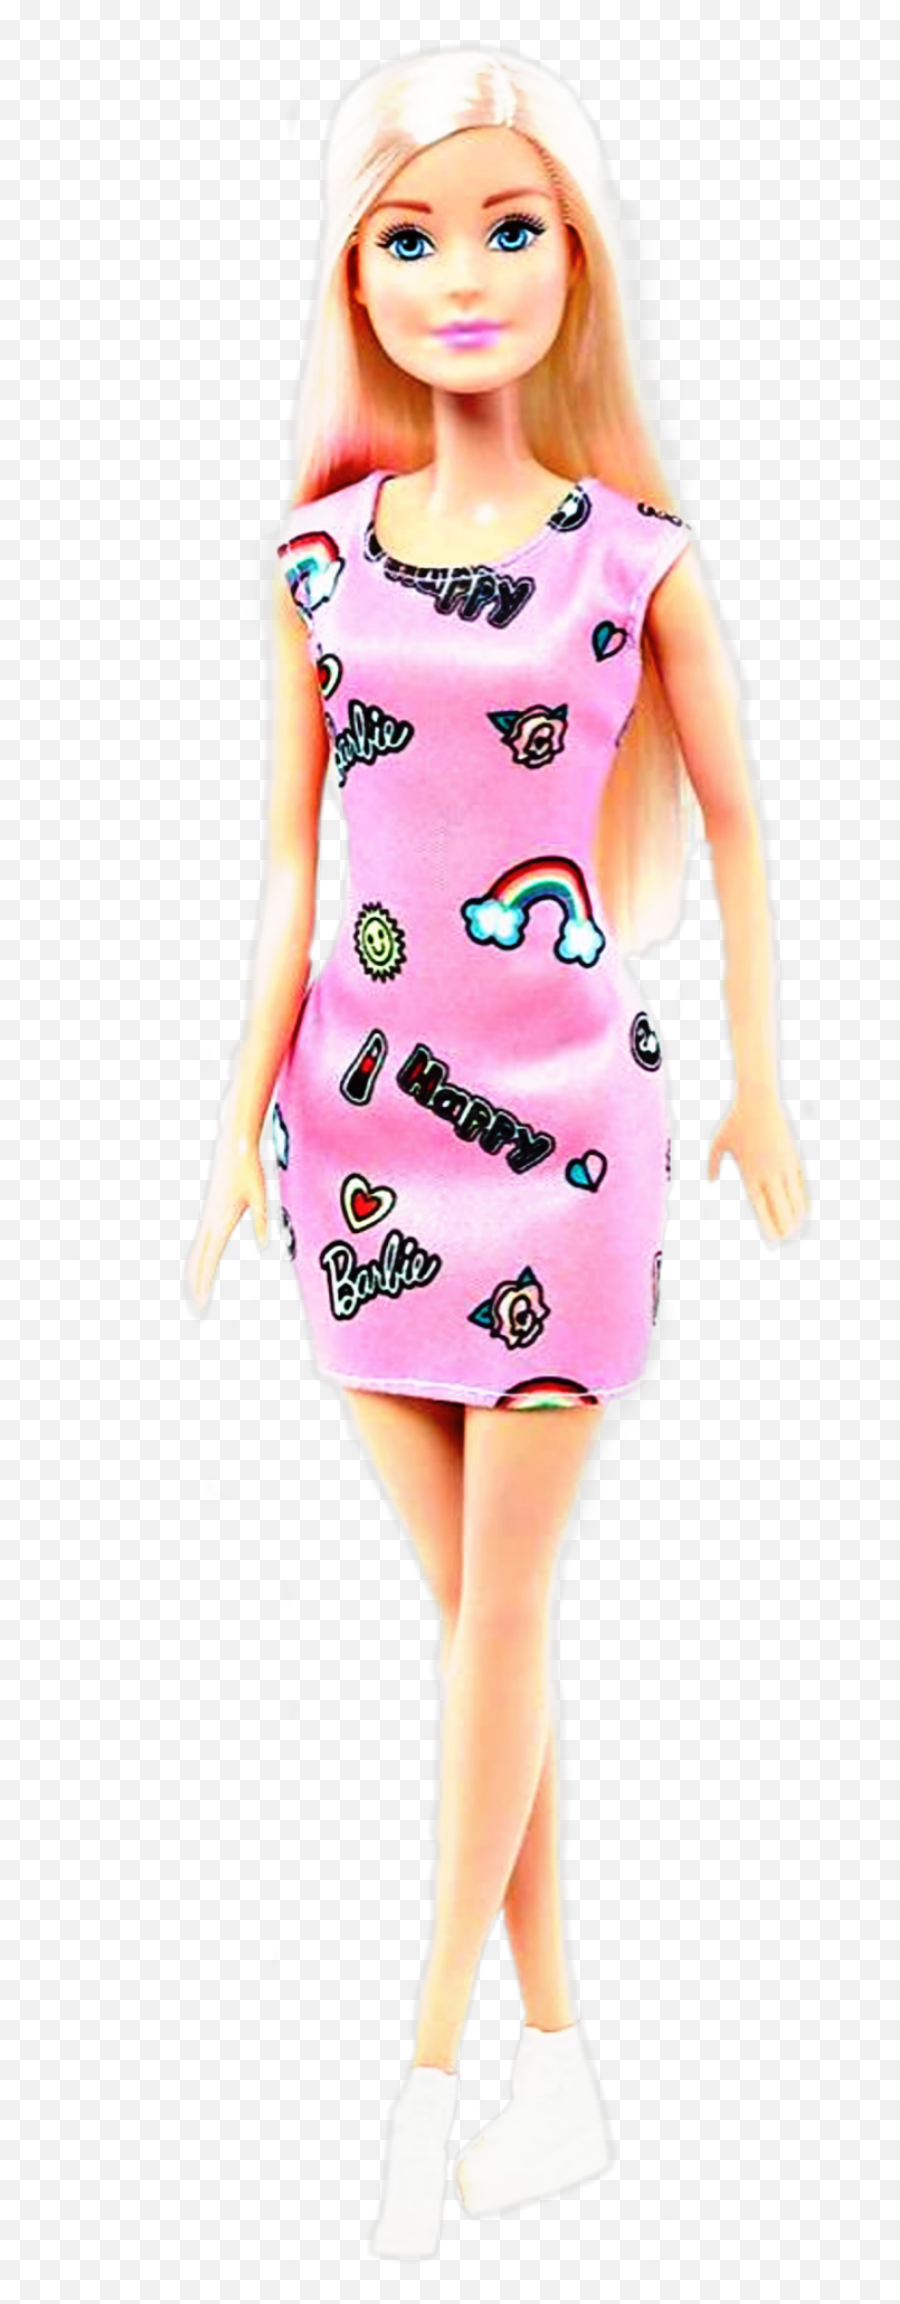 Barbie Doll Girly Playful - Mattel Barbie Chic Doll In Dress Pink Emoji,Barbie Emoji